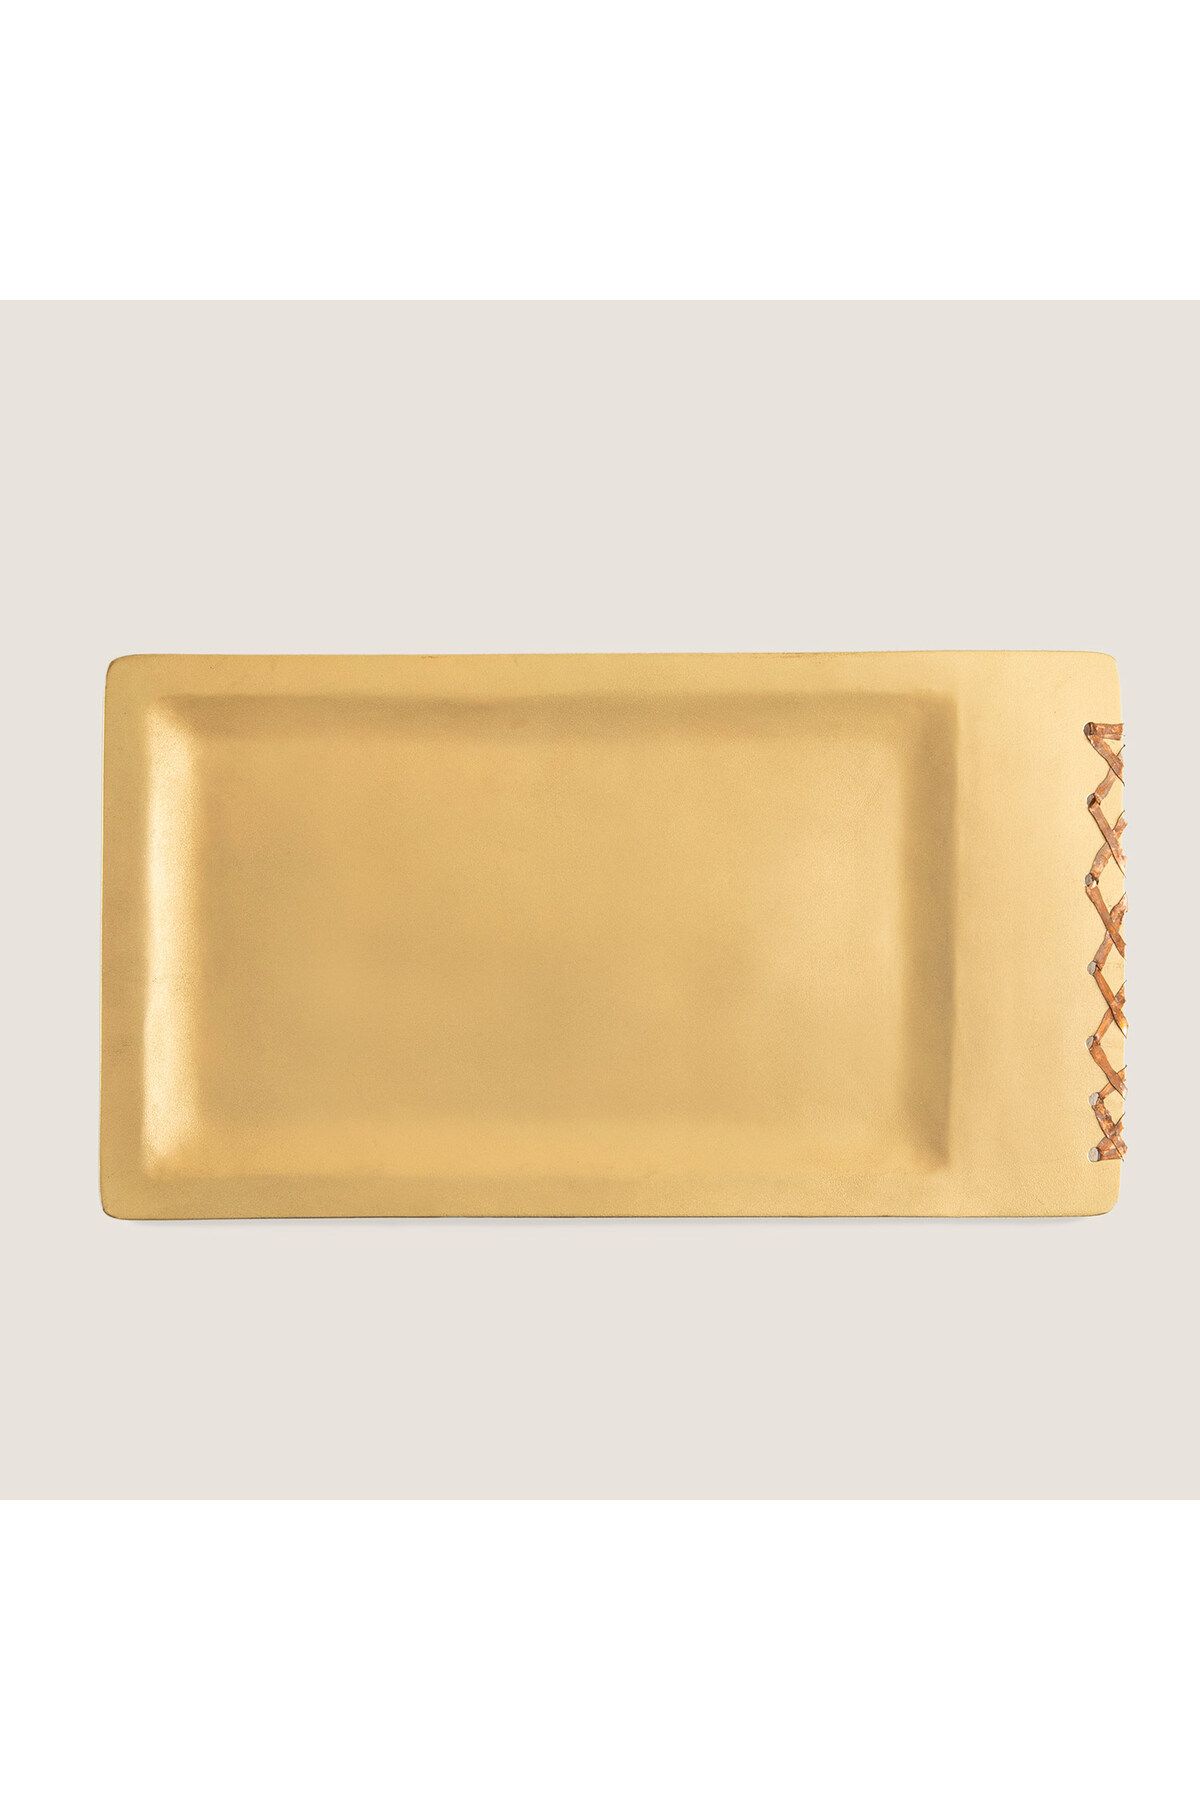 Chakra Stitch Dekoratif Tabak 26x16 Cm Gold